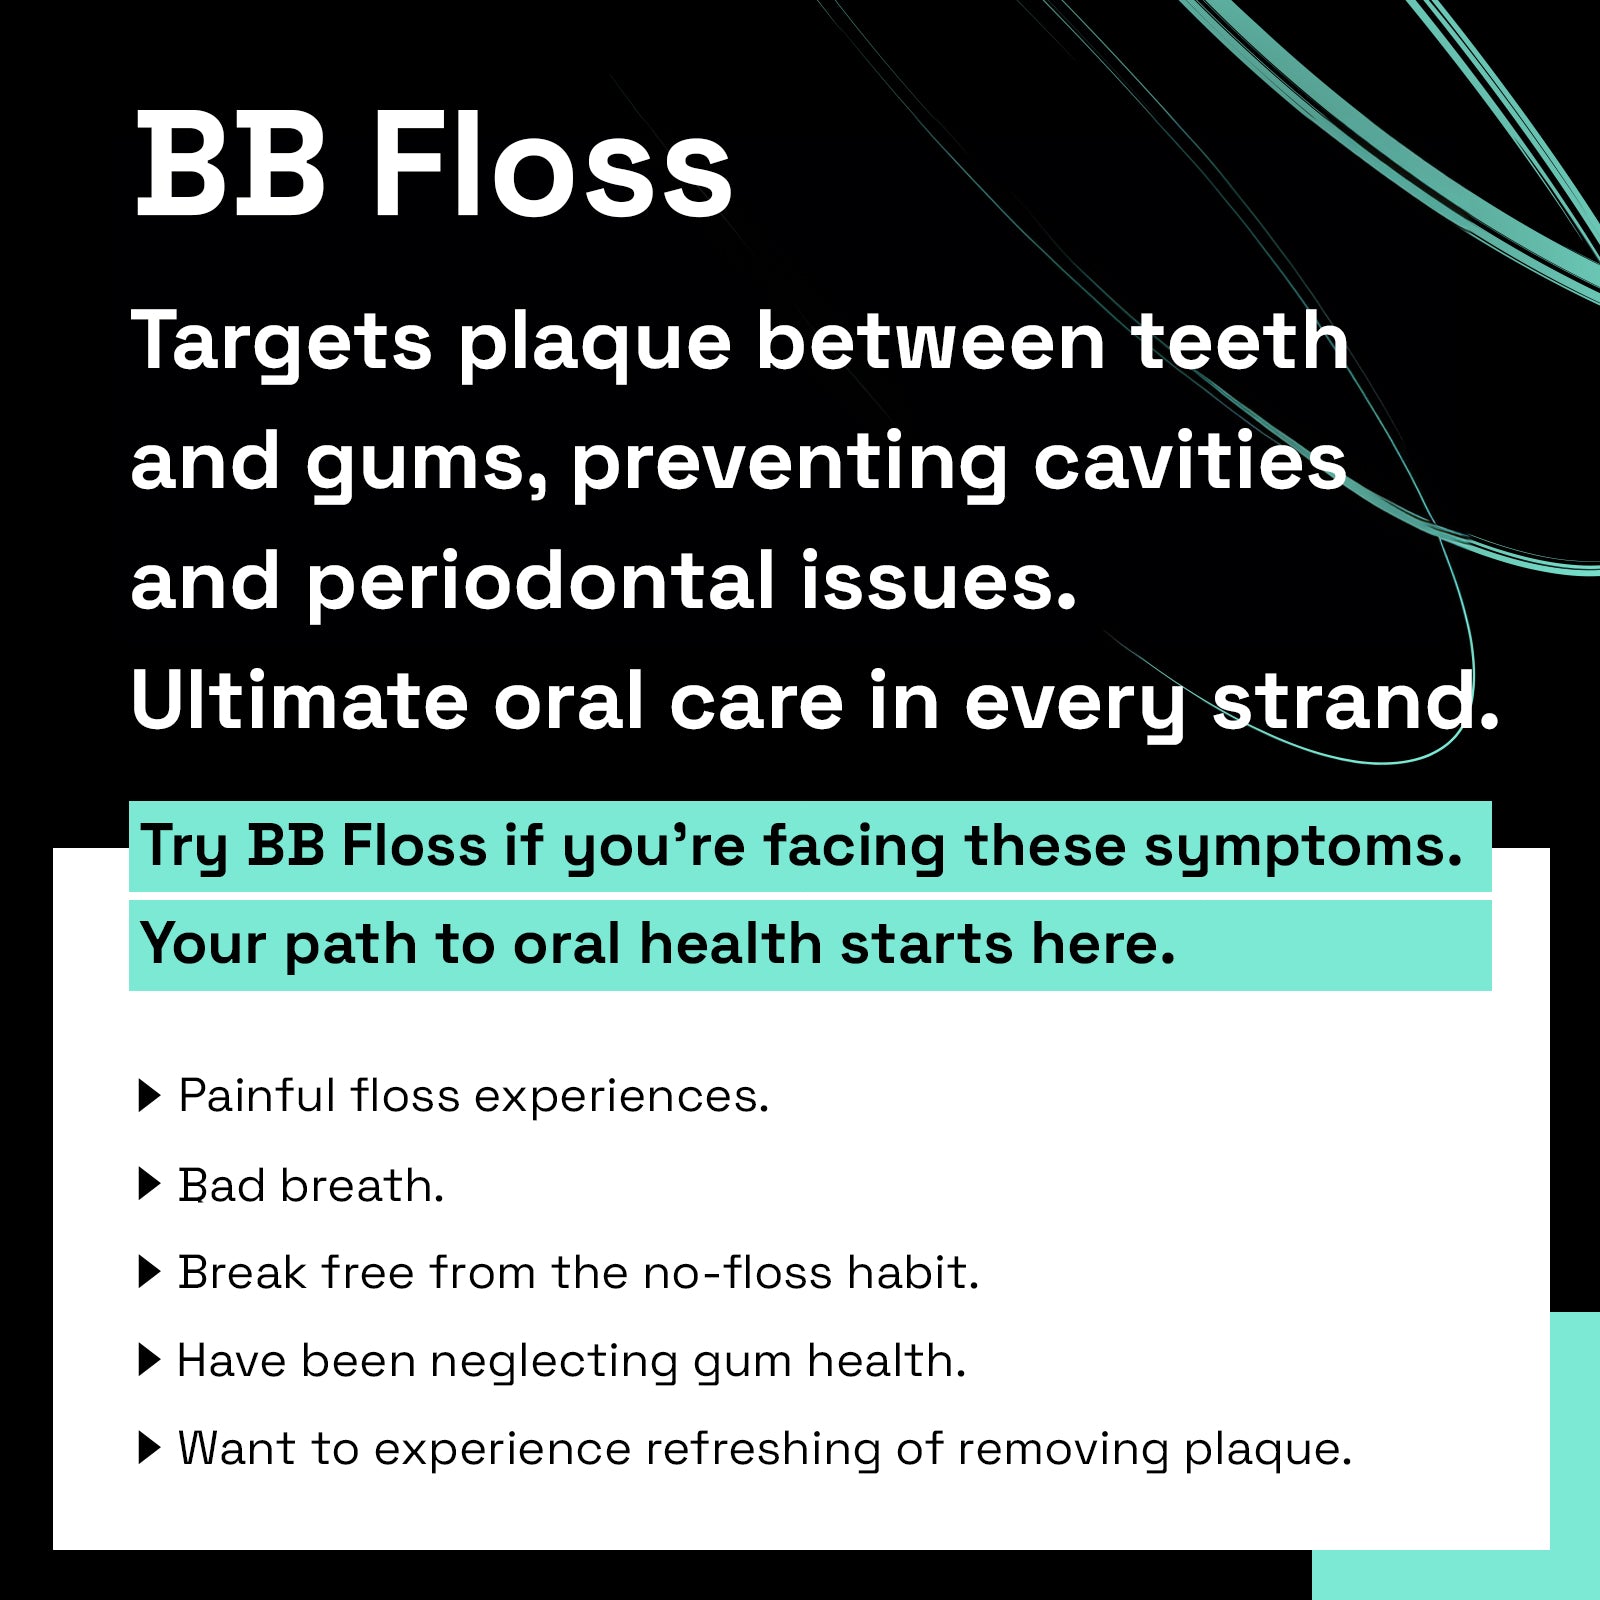 Brushmo Black Floss, Expanding Dental Floss 220 YD, 4pk